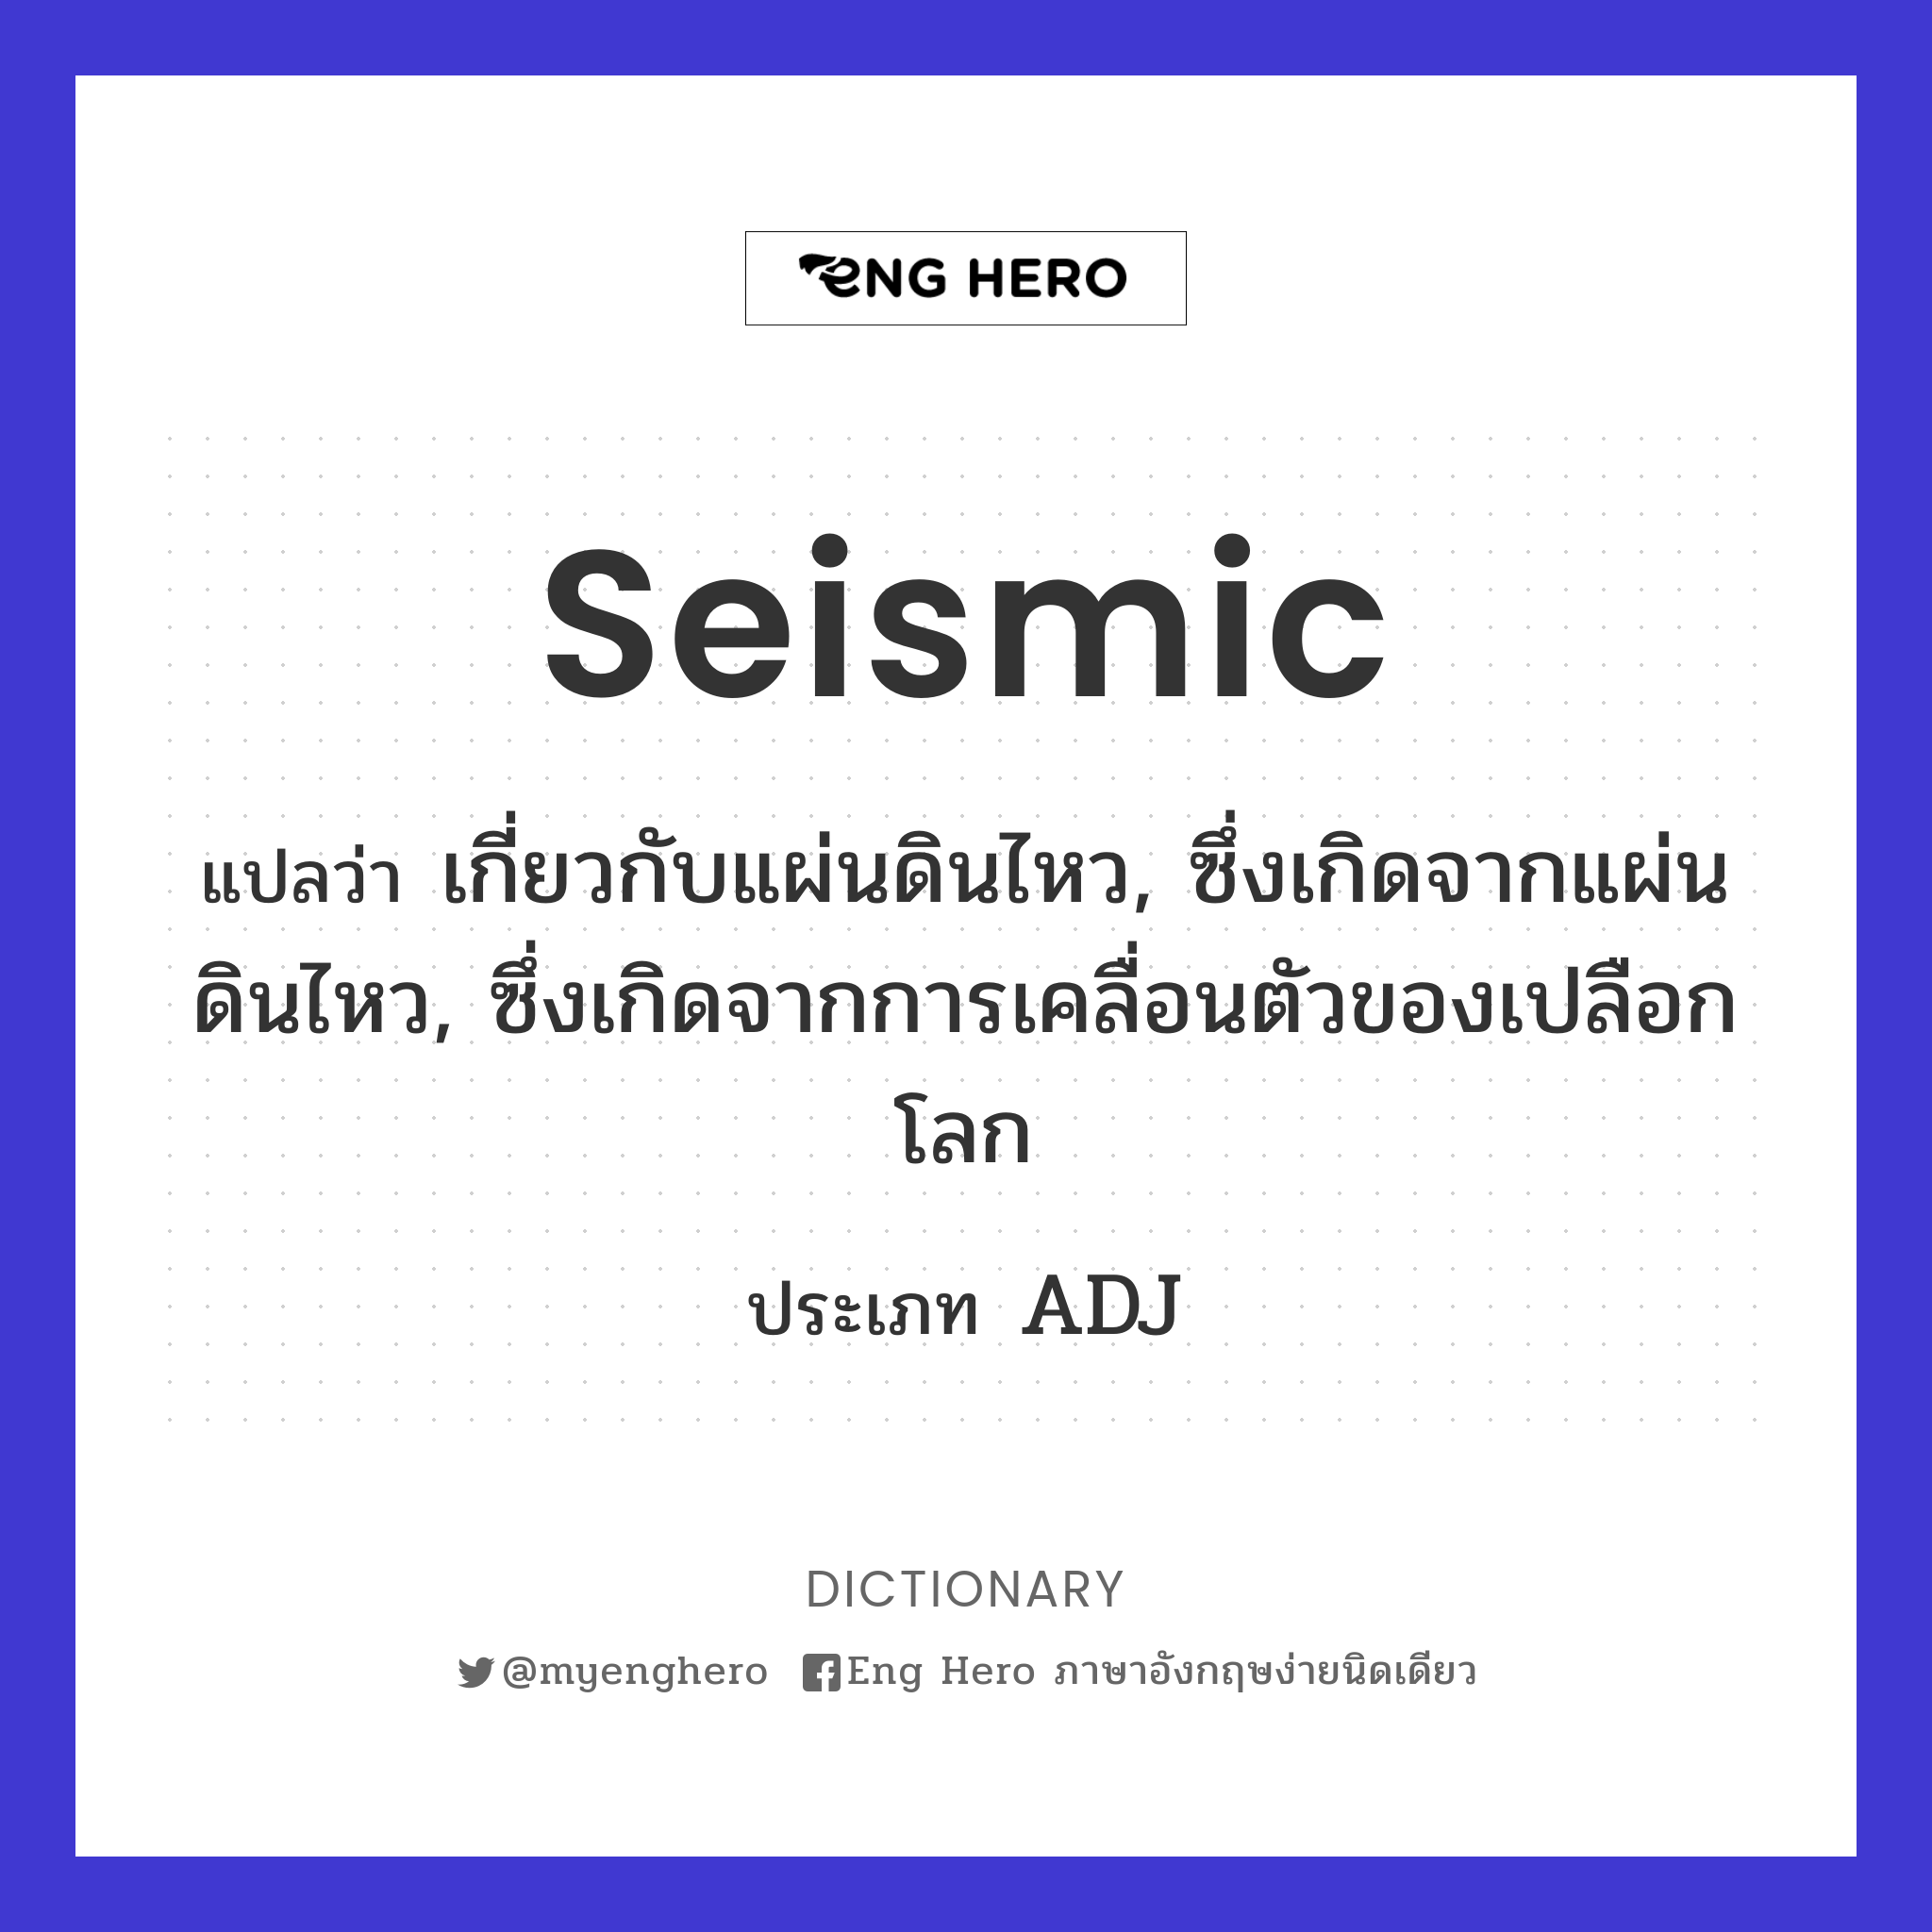 seismic